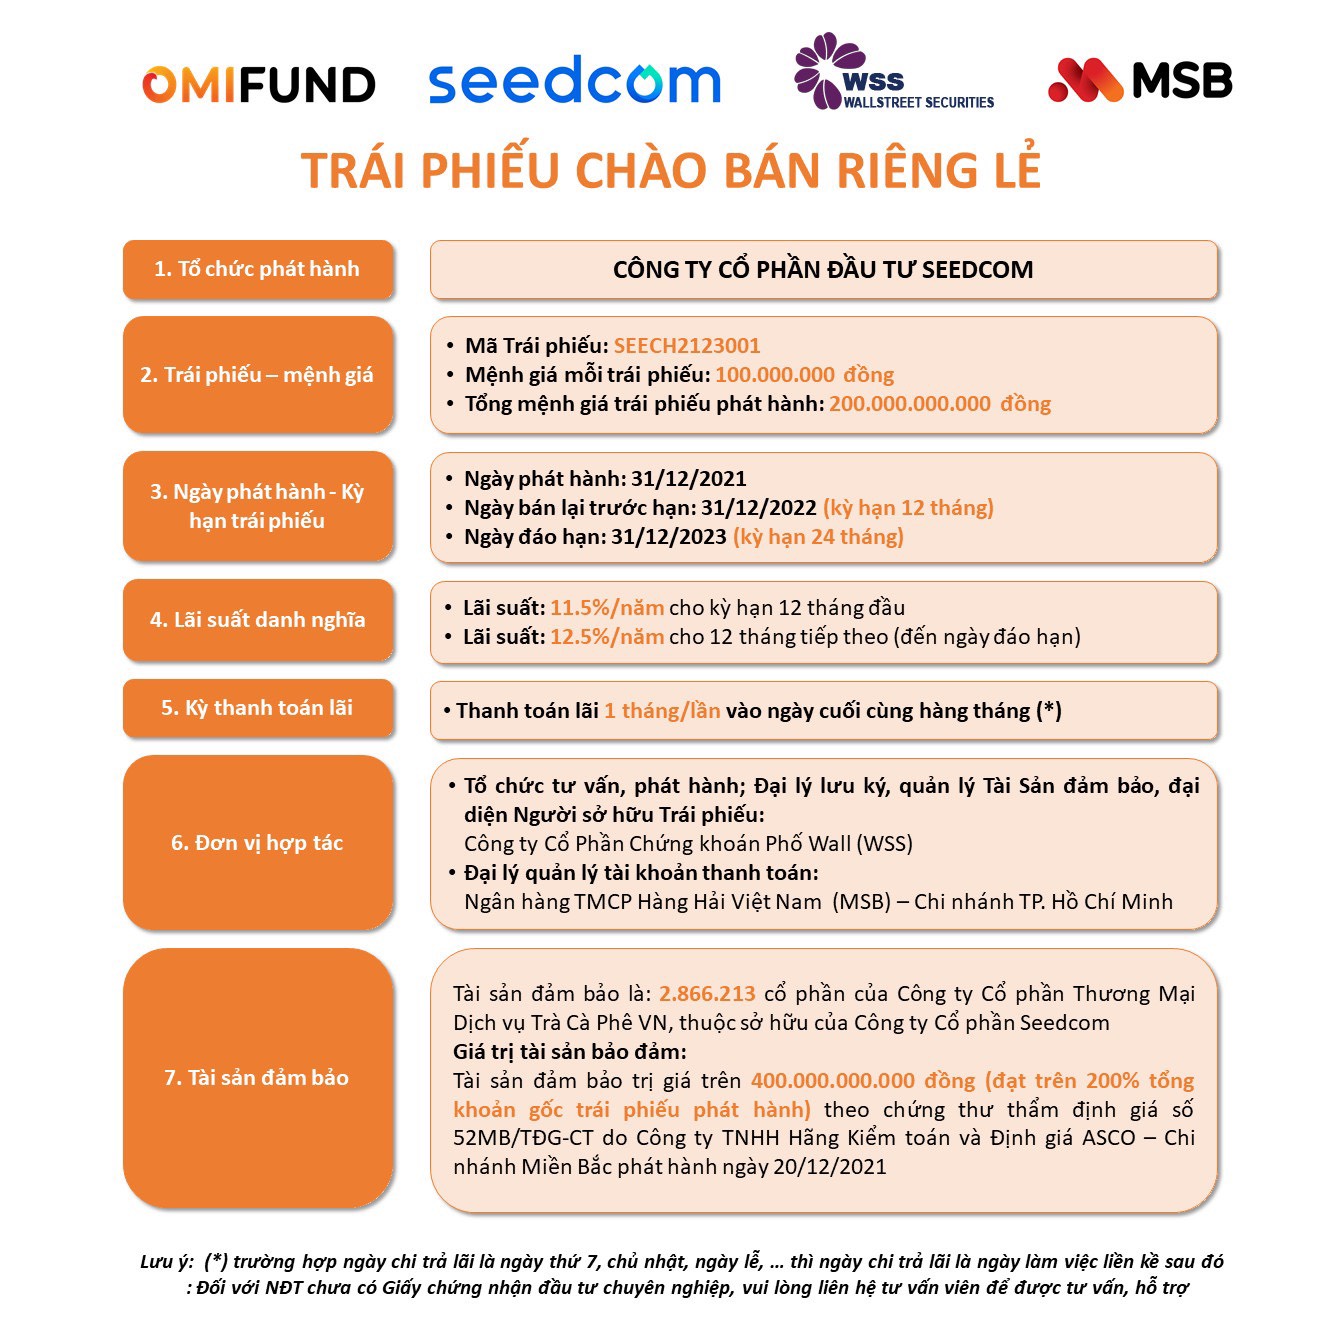 Trái phiếu Seedcom lãi suất 11.5-12.5%/năm, mua tối thiểu 100 triệu